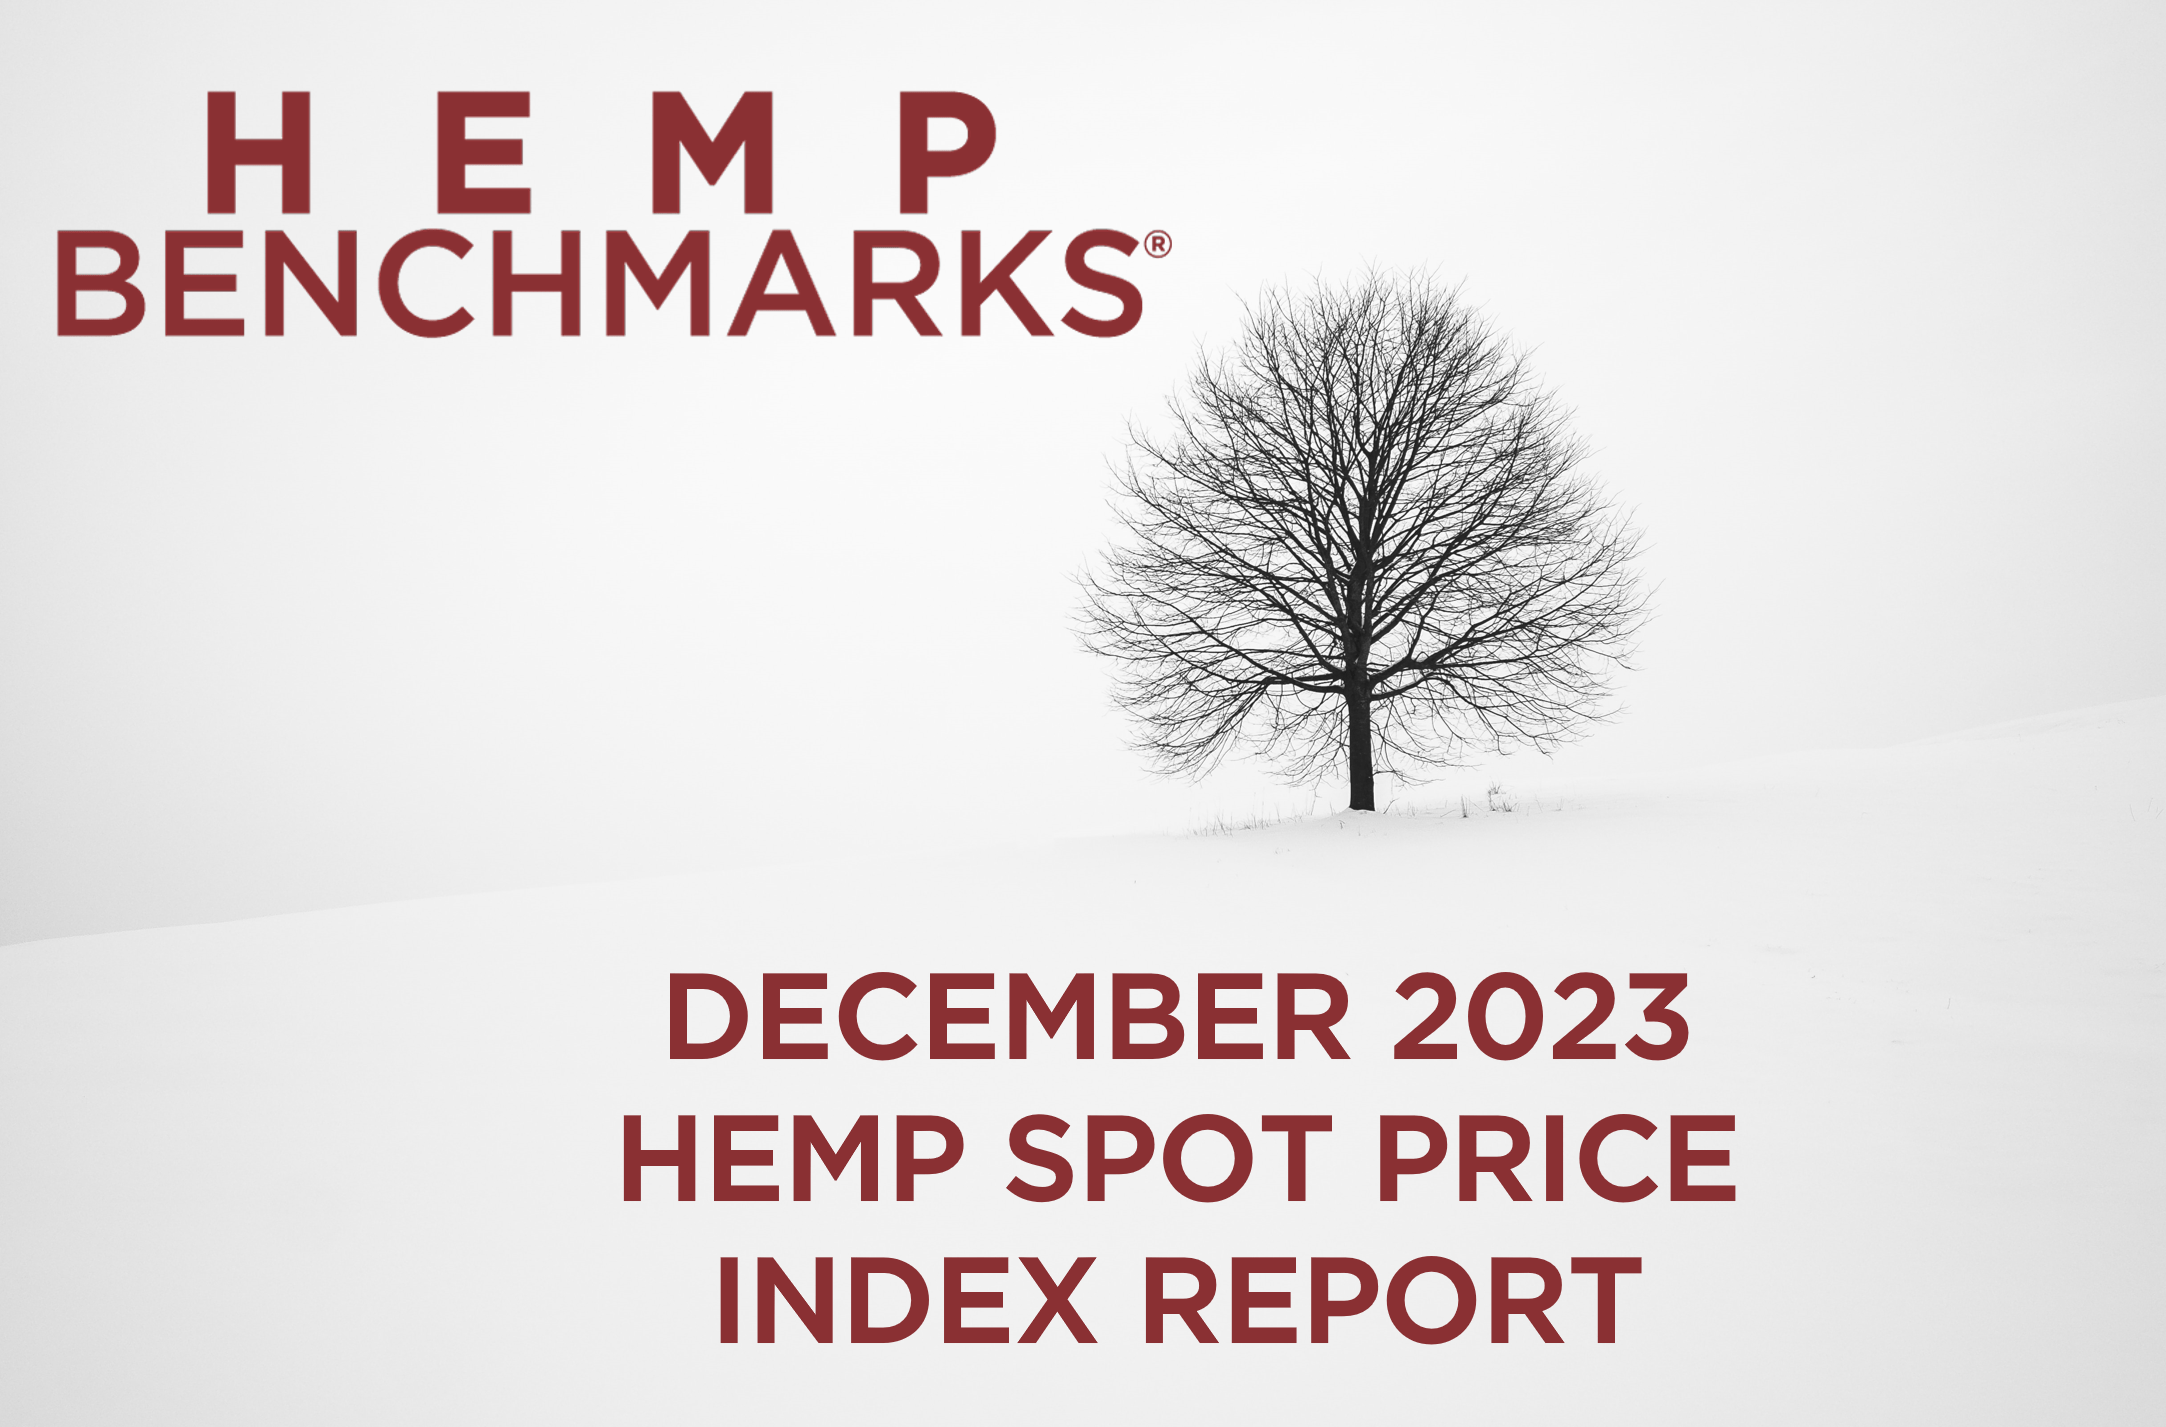 Hemp Benchmarks December 2023 Spot Price Index Report